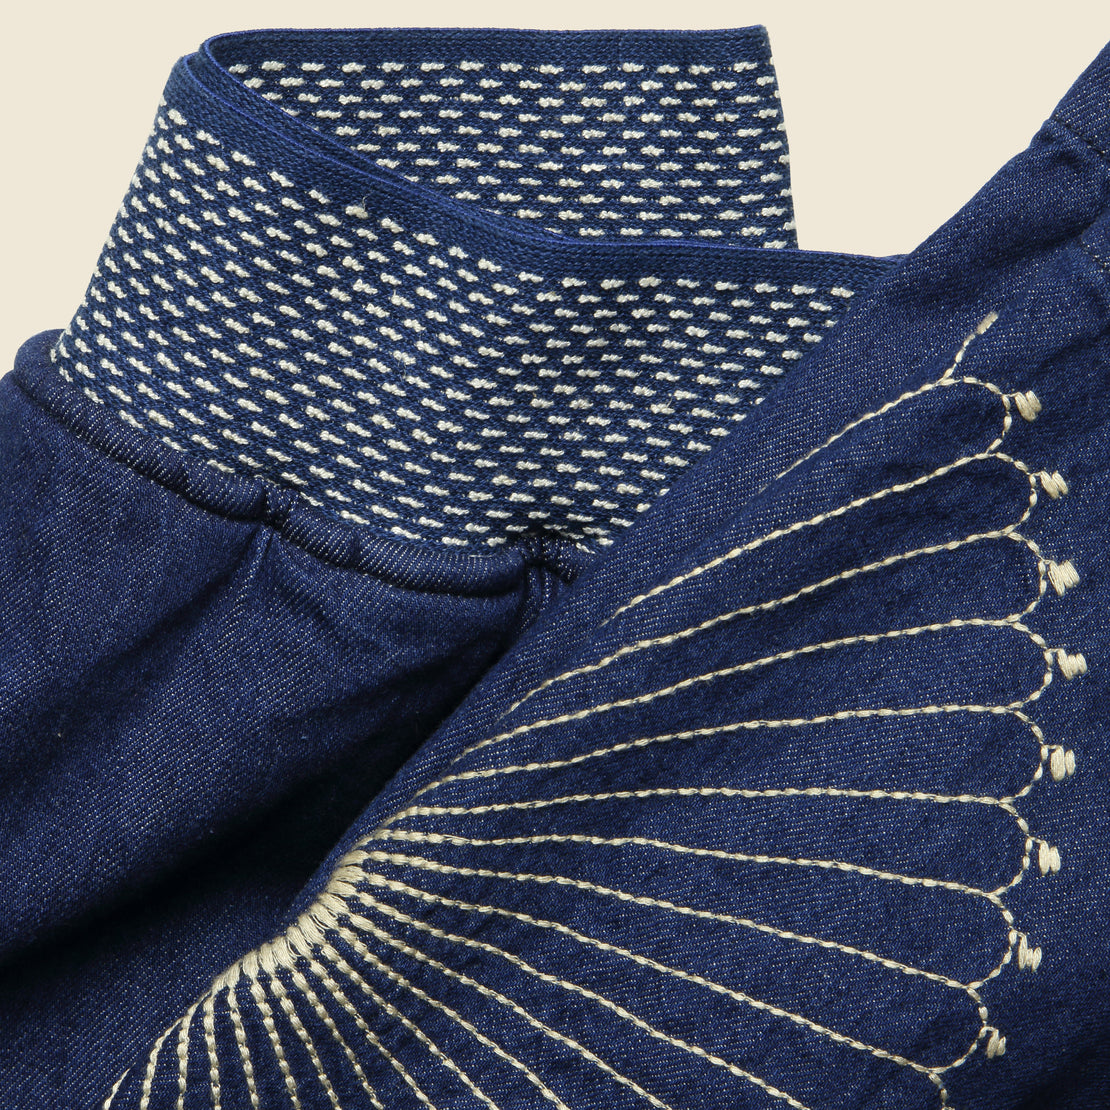 8oz Denim Makanai Furishiki Embroidery Wrap Pants - Indigo - Kapital - STAG Provisions - W - Pants - Lounge